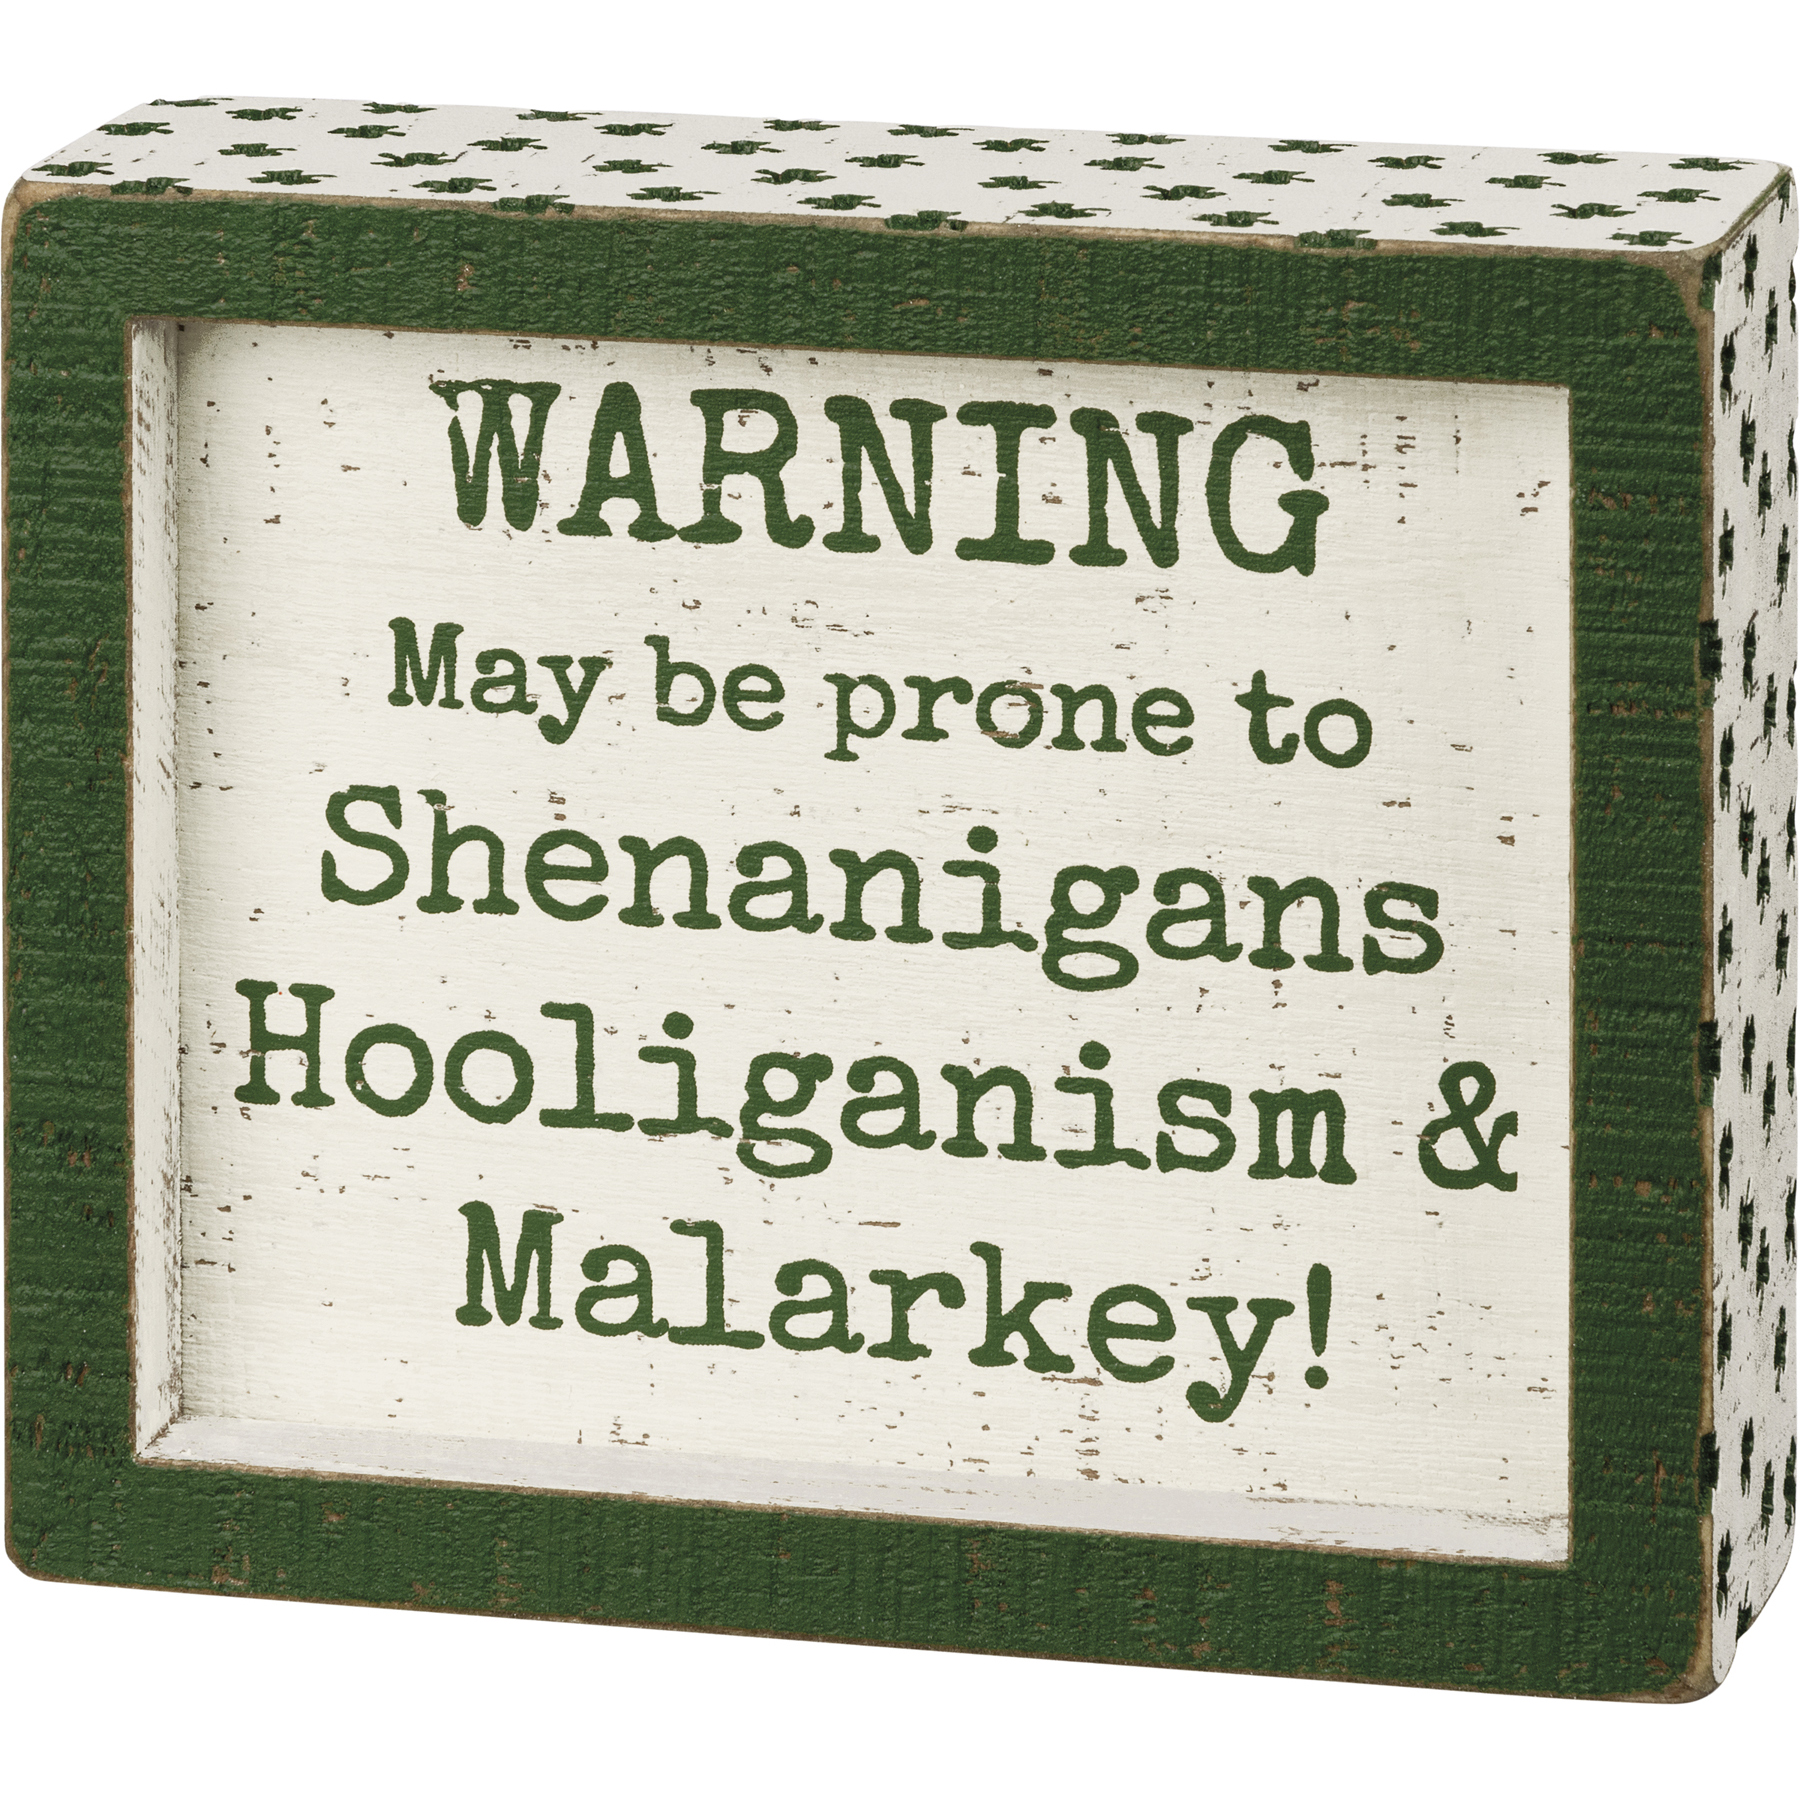 St Patricks Day Decor: shenanigans & Malarkey Sign in Green. St Patrick's  Day Signs, Irish St Pattys Day 